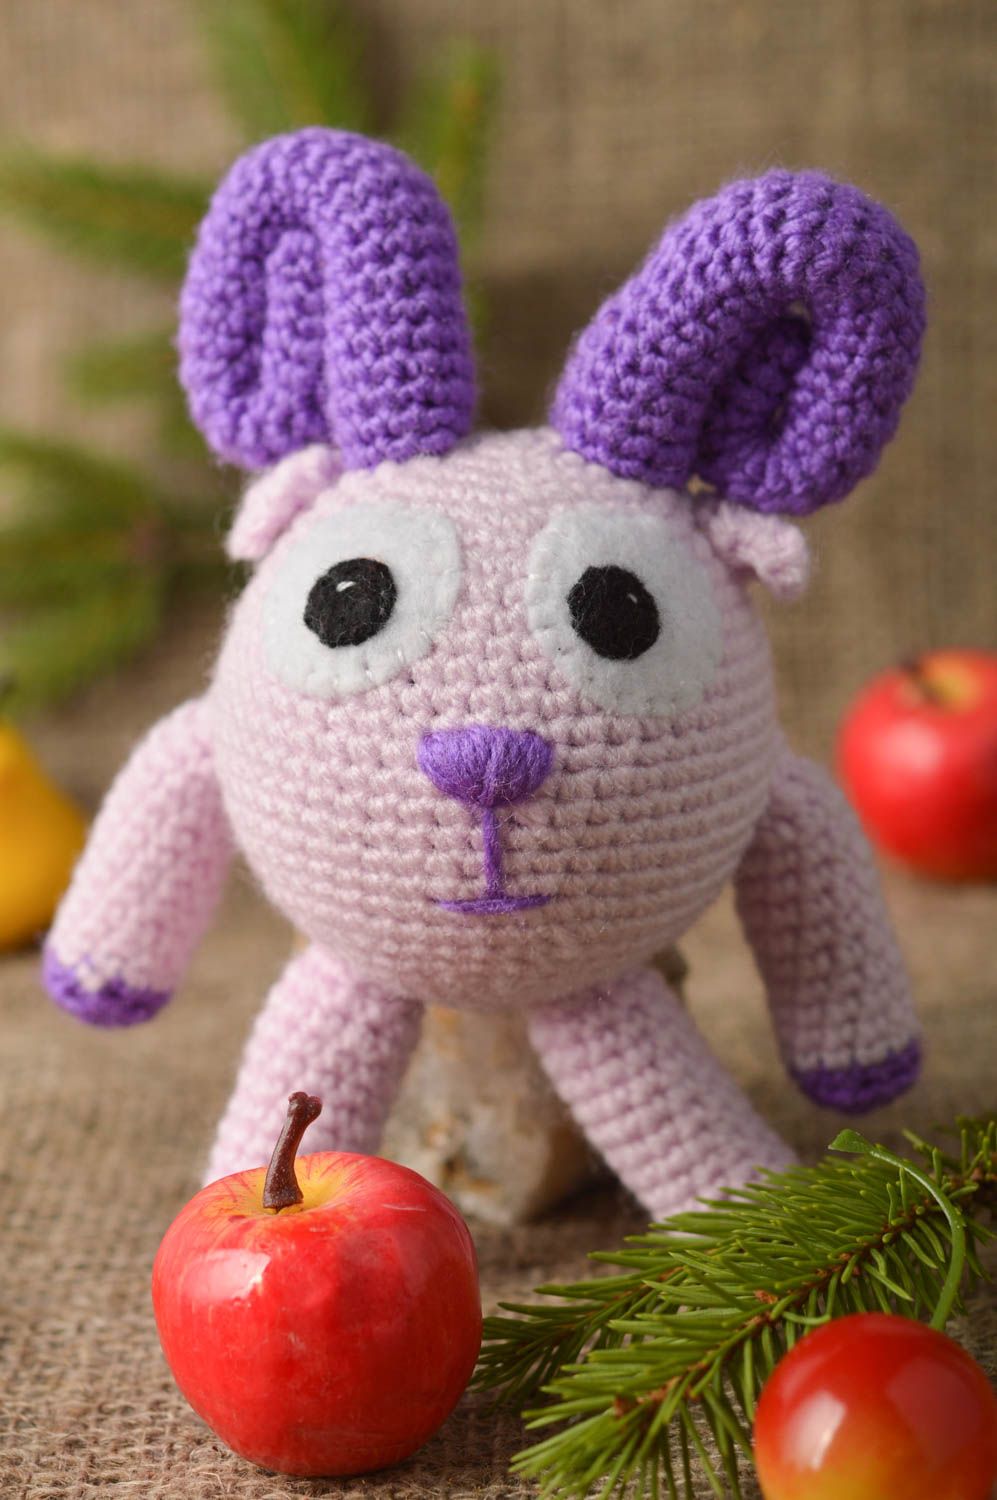 Muñeco de ganchillo juguete tejido a crochet hecho a mano regalo original foto 1